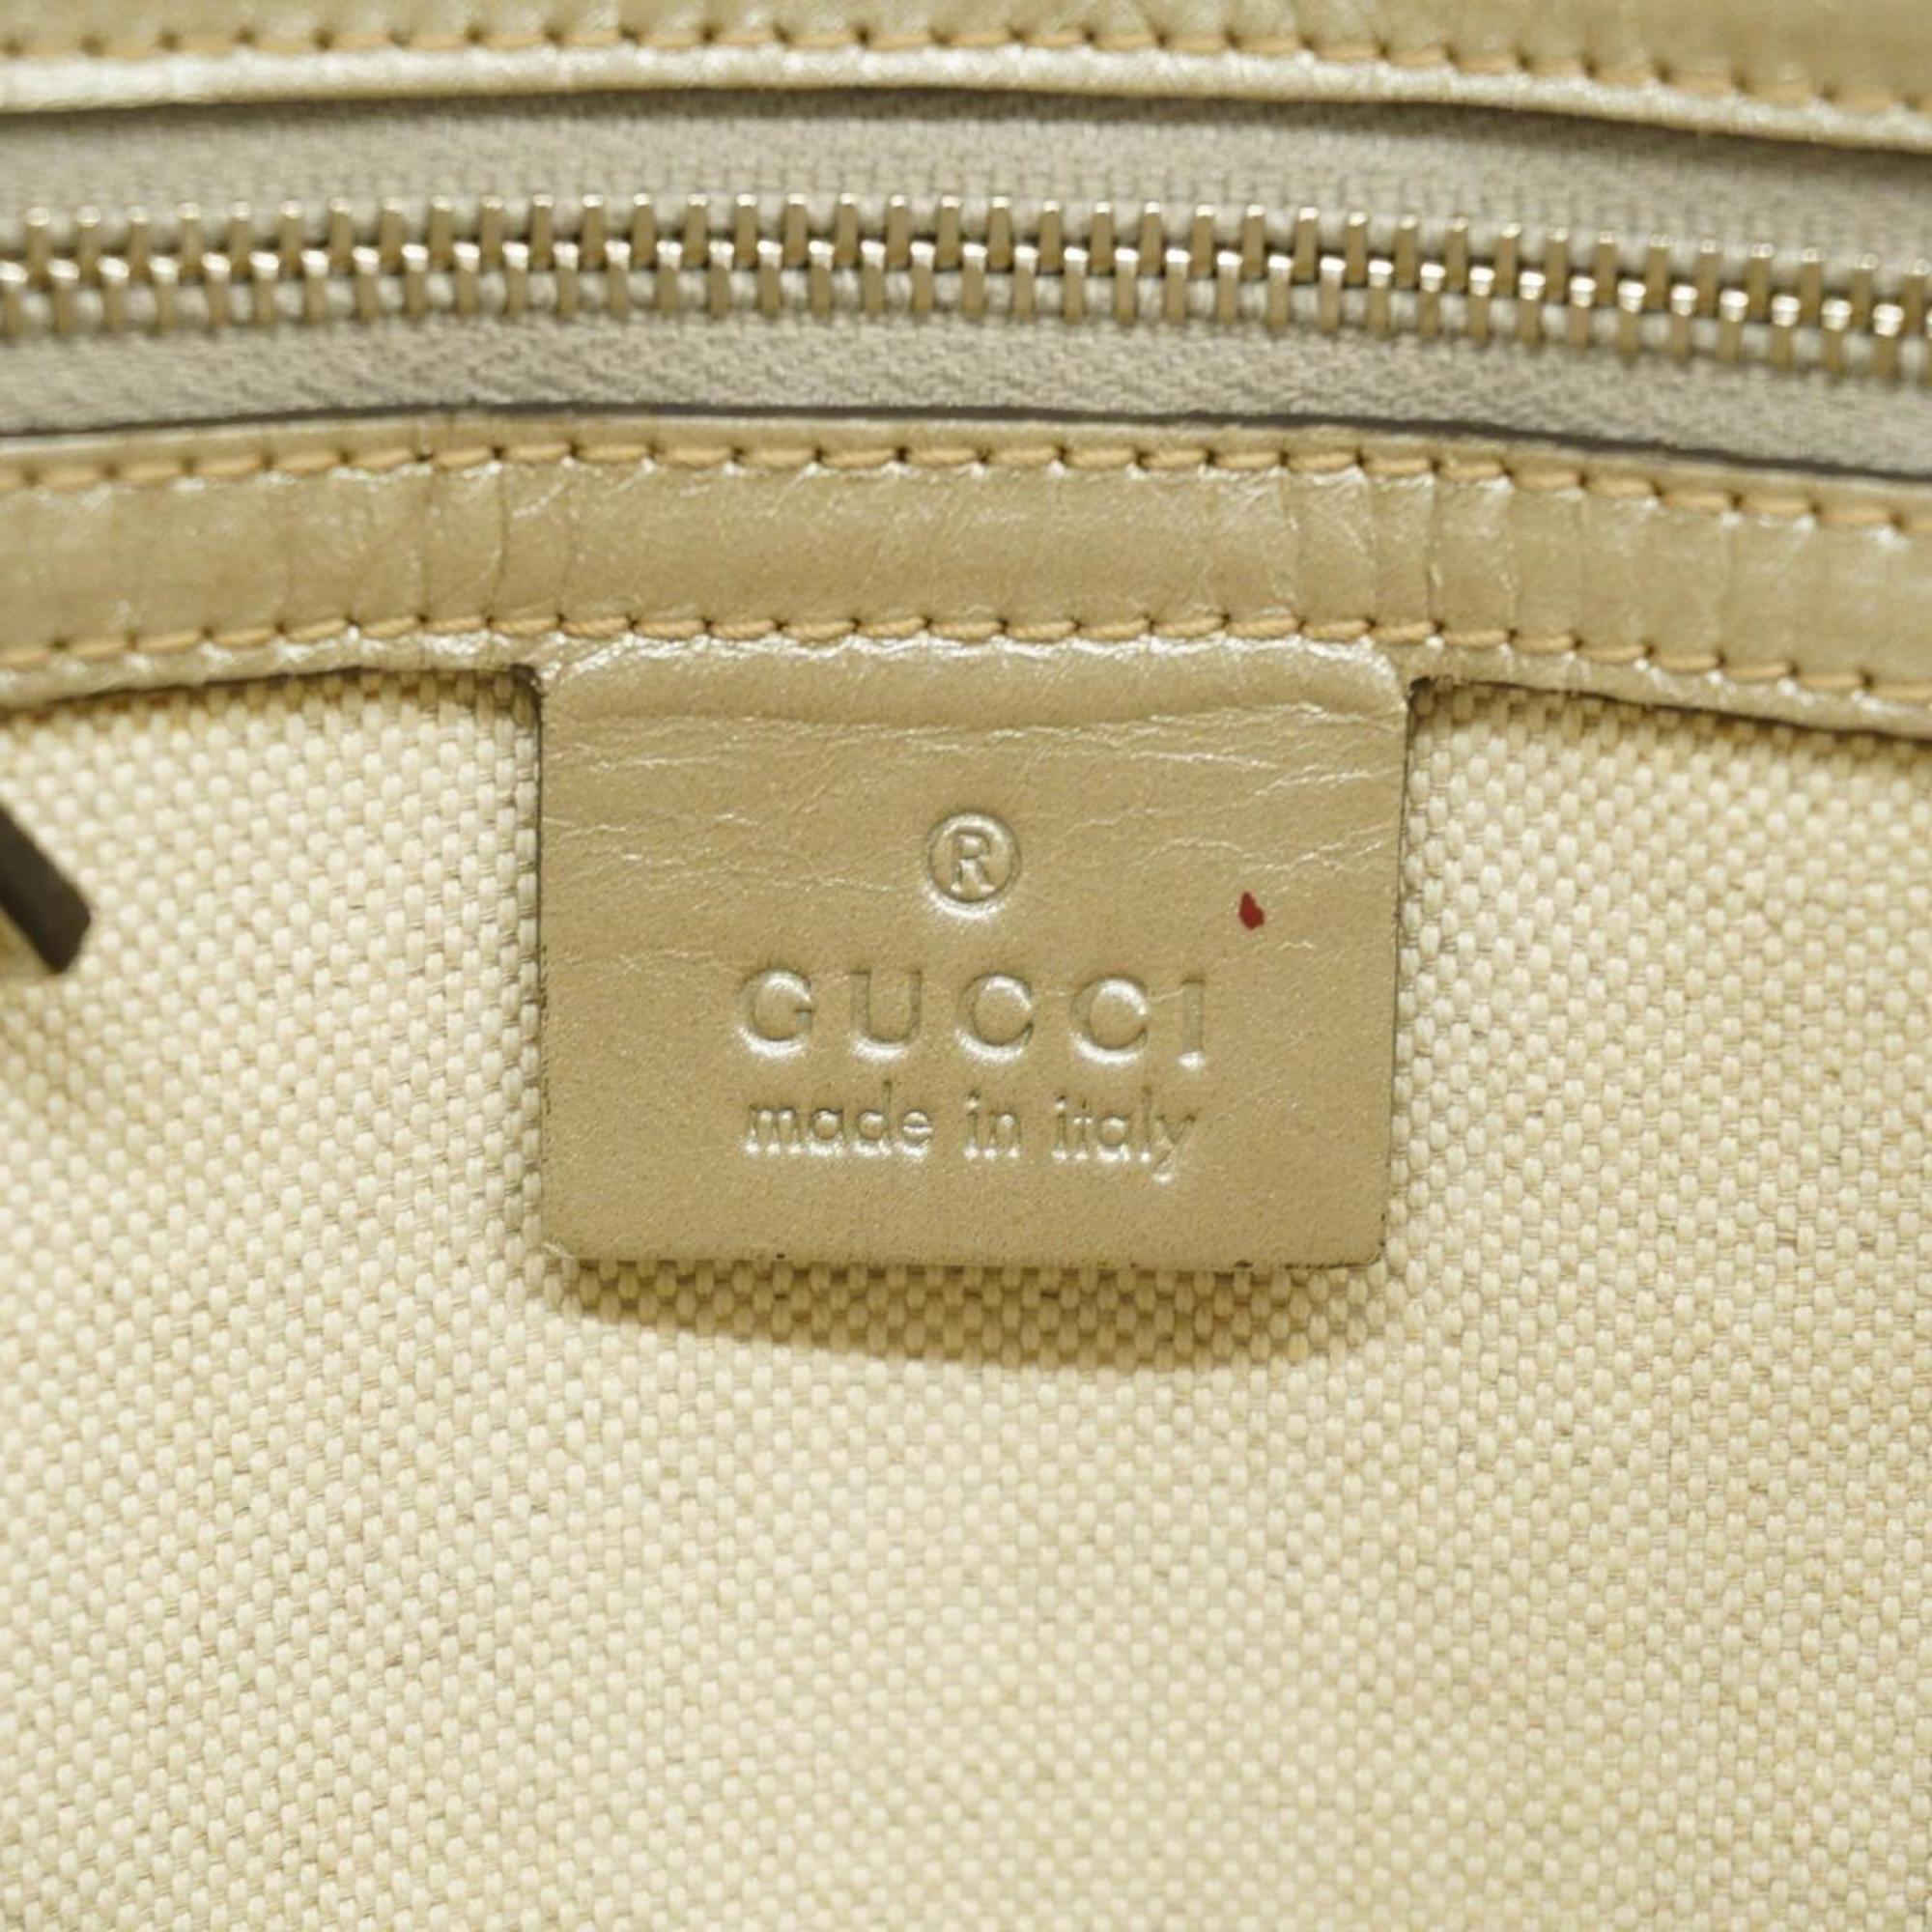 Gucci Tote Bag GG Imprime 197953 Leather Silver Women's